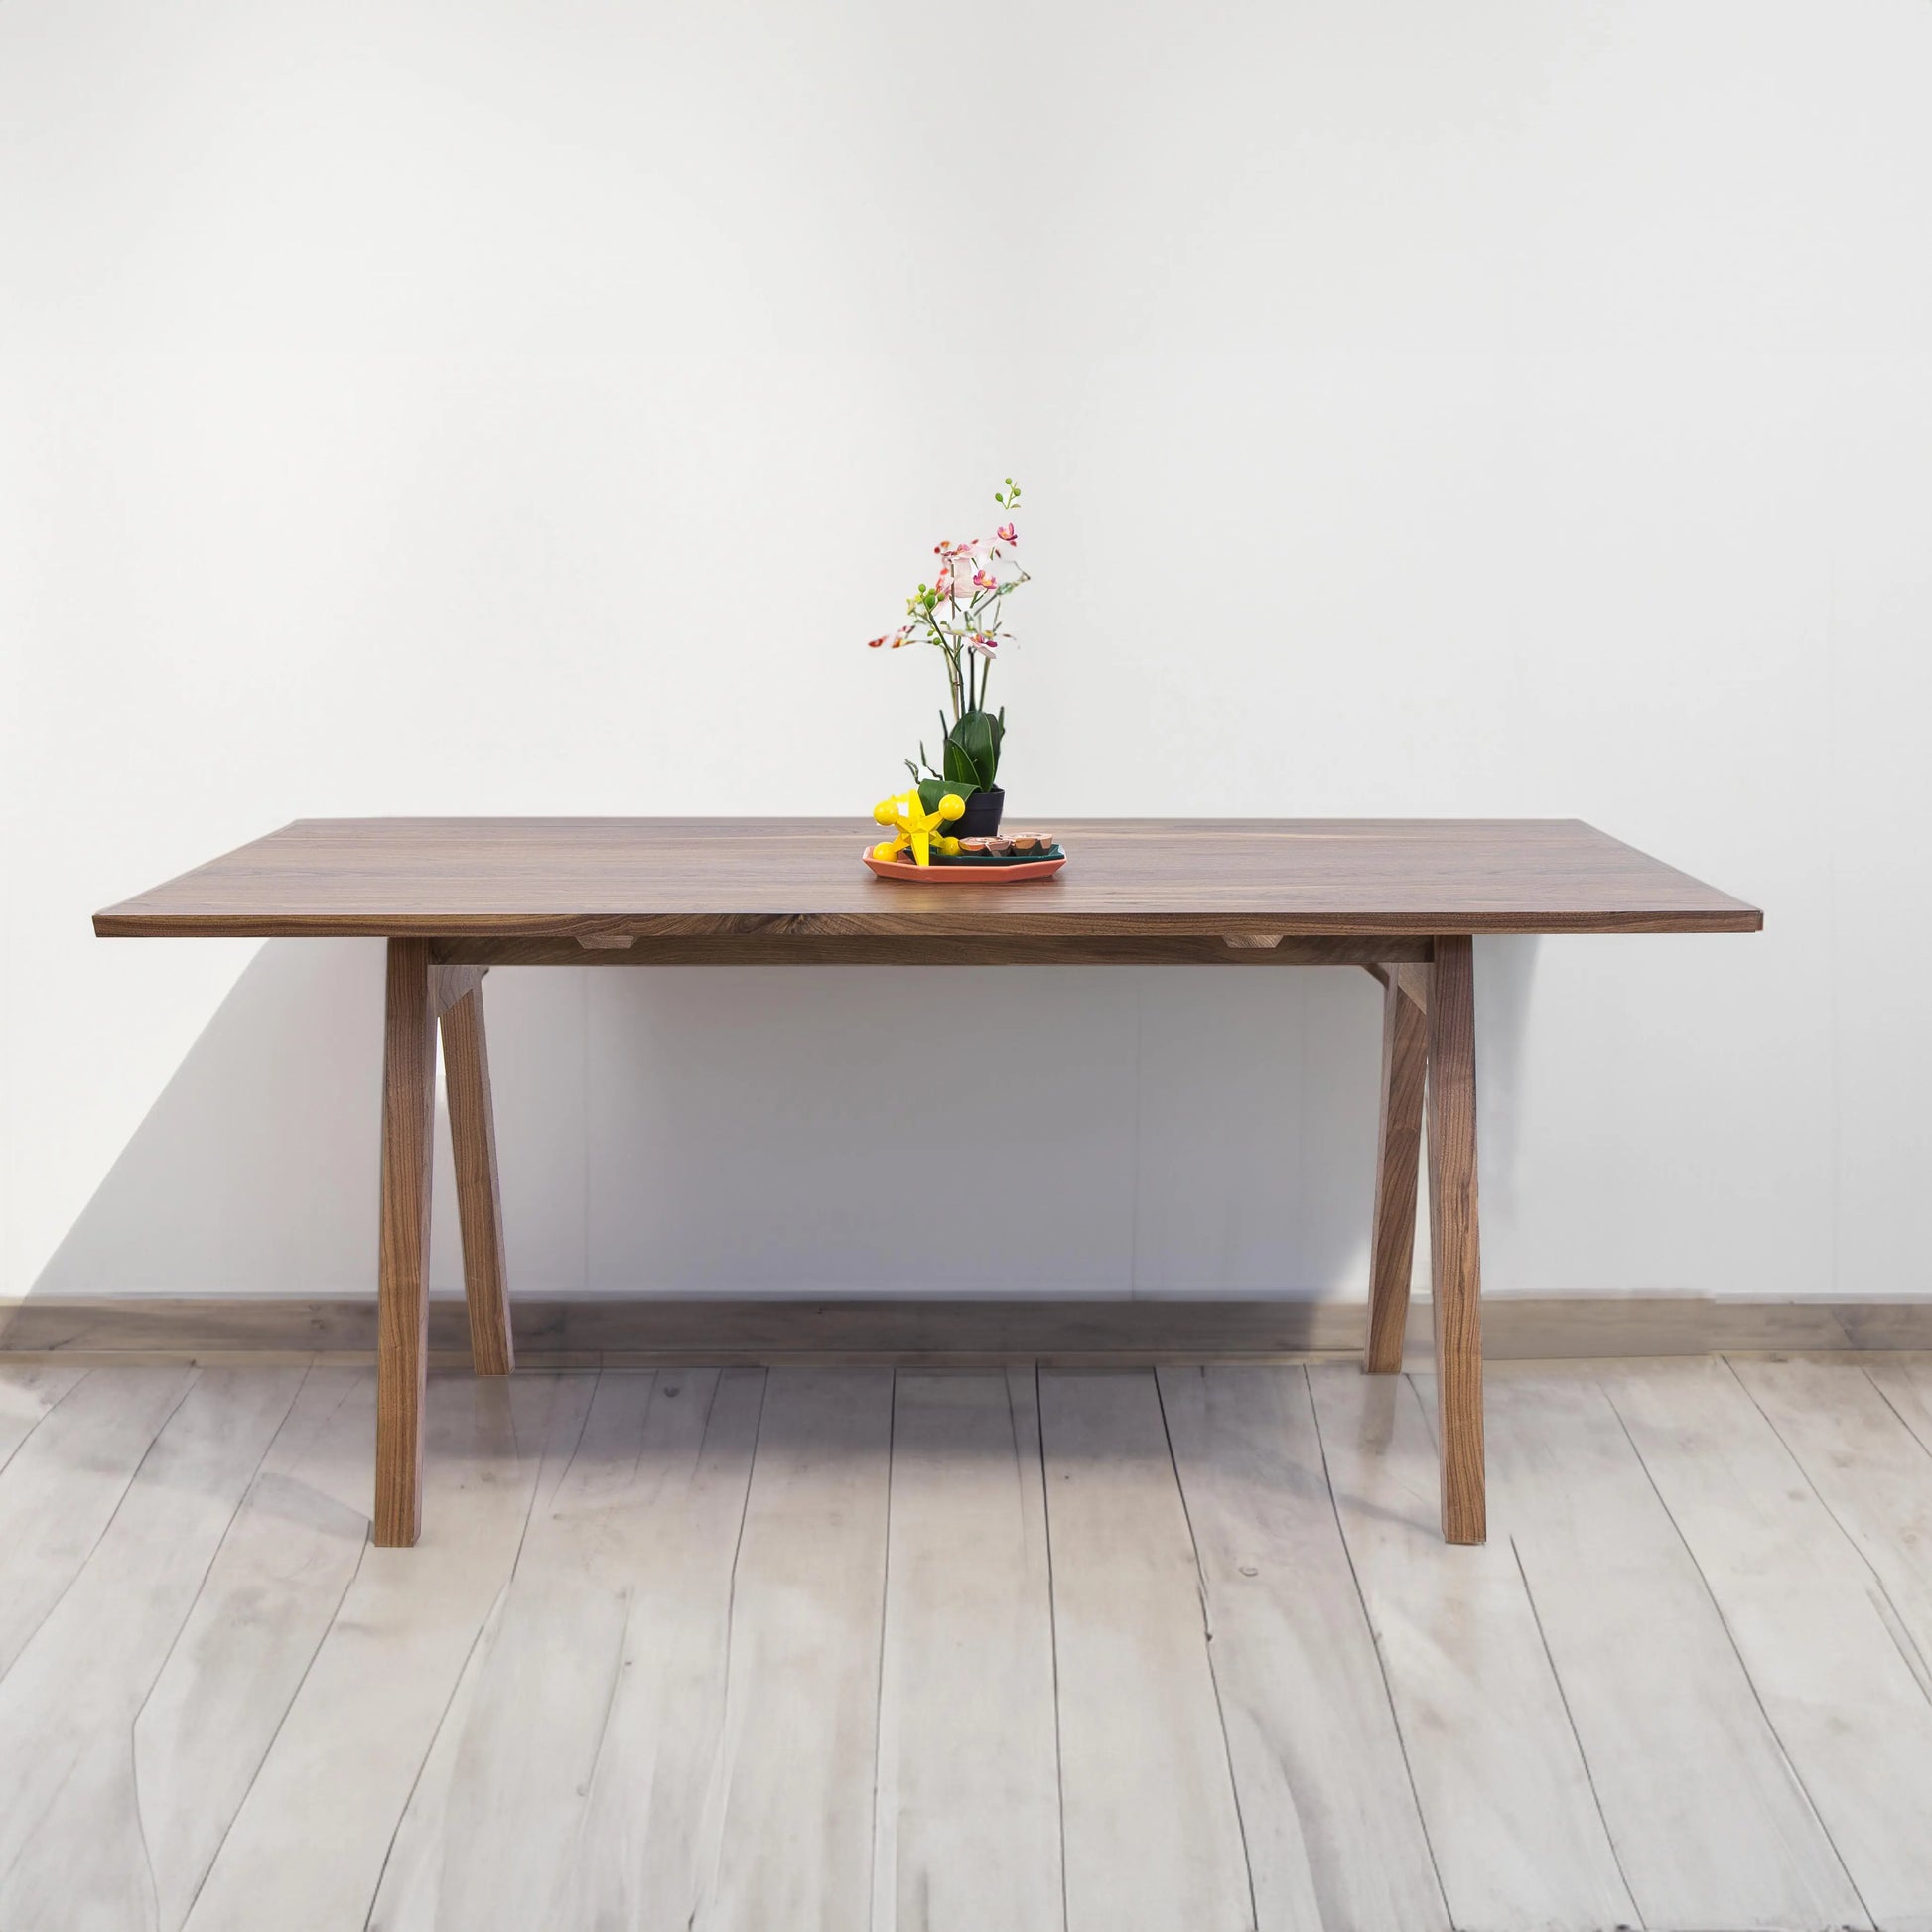 Danish Modern influences in the design of the Sputnik Scandinavian Dining Table